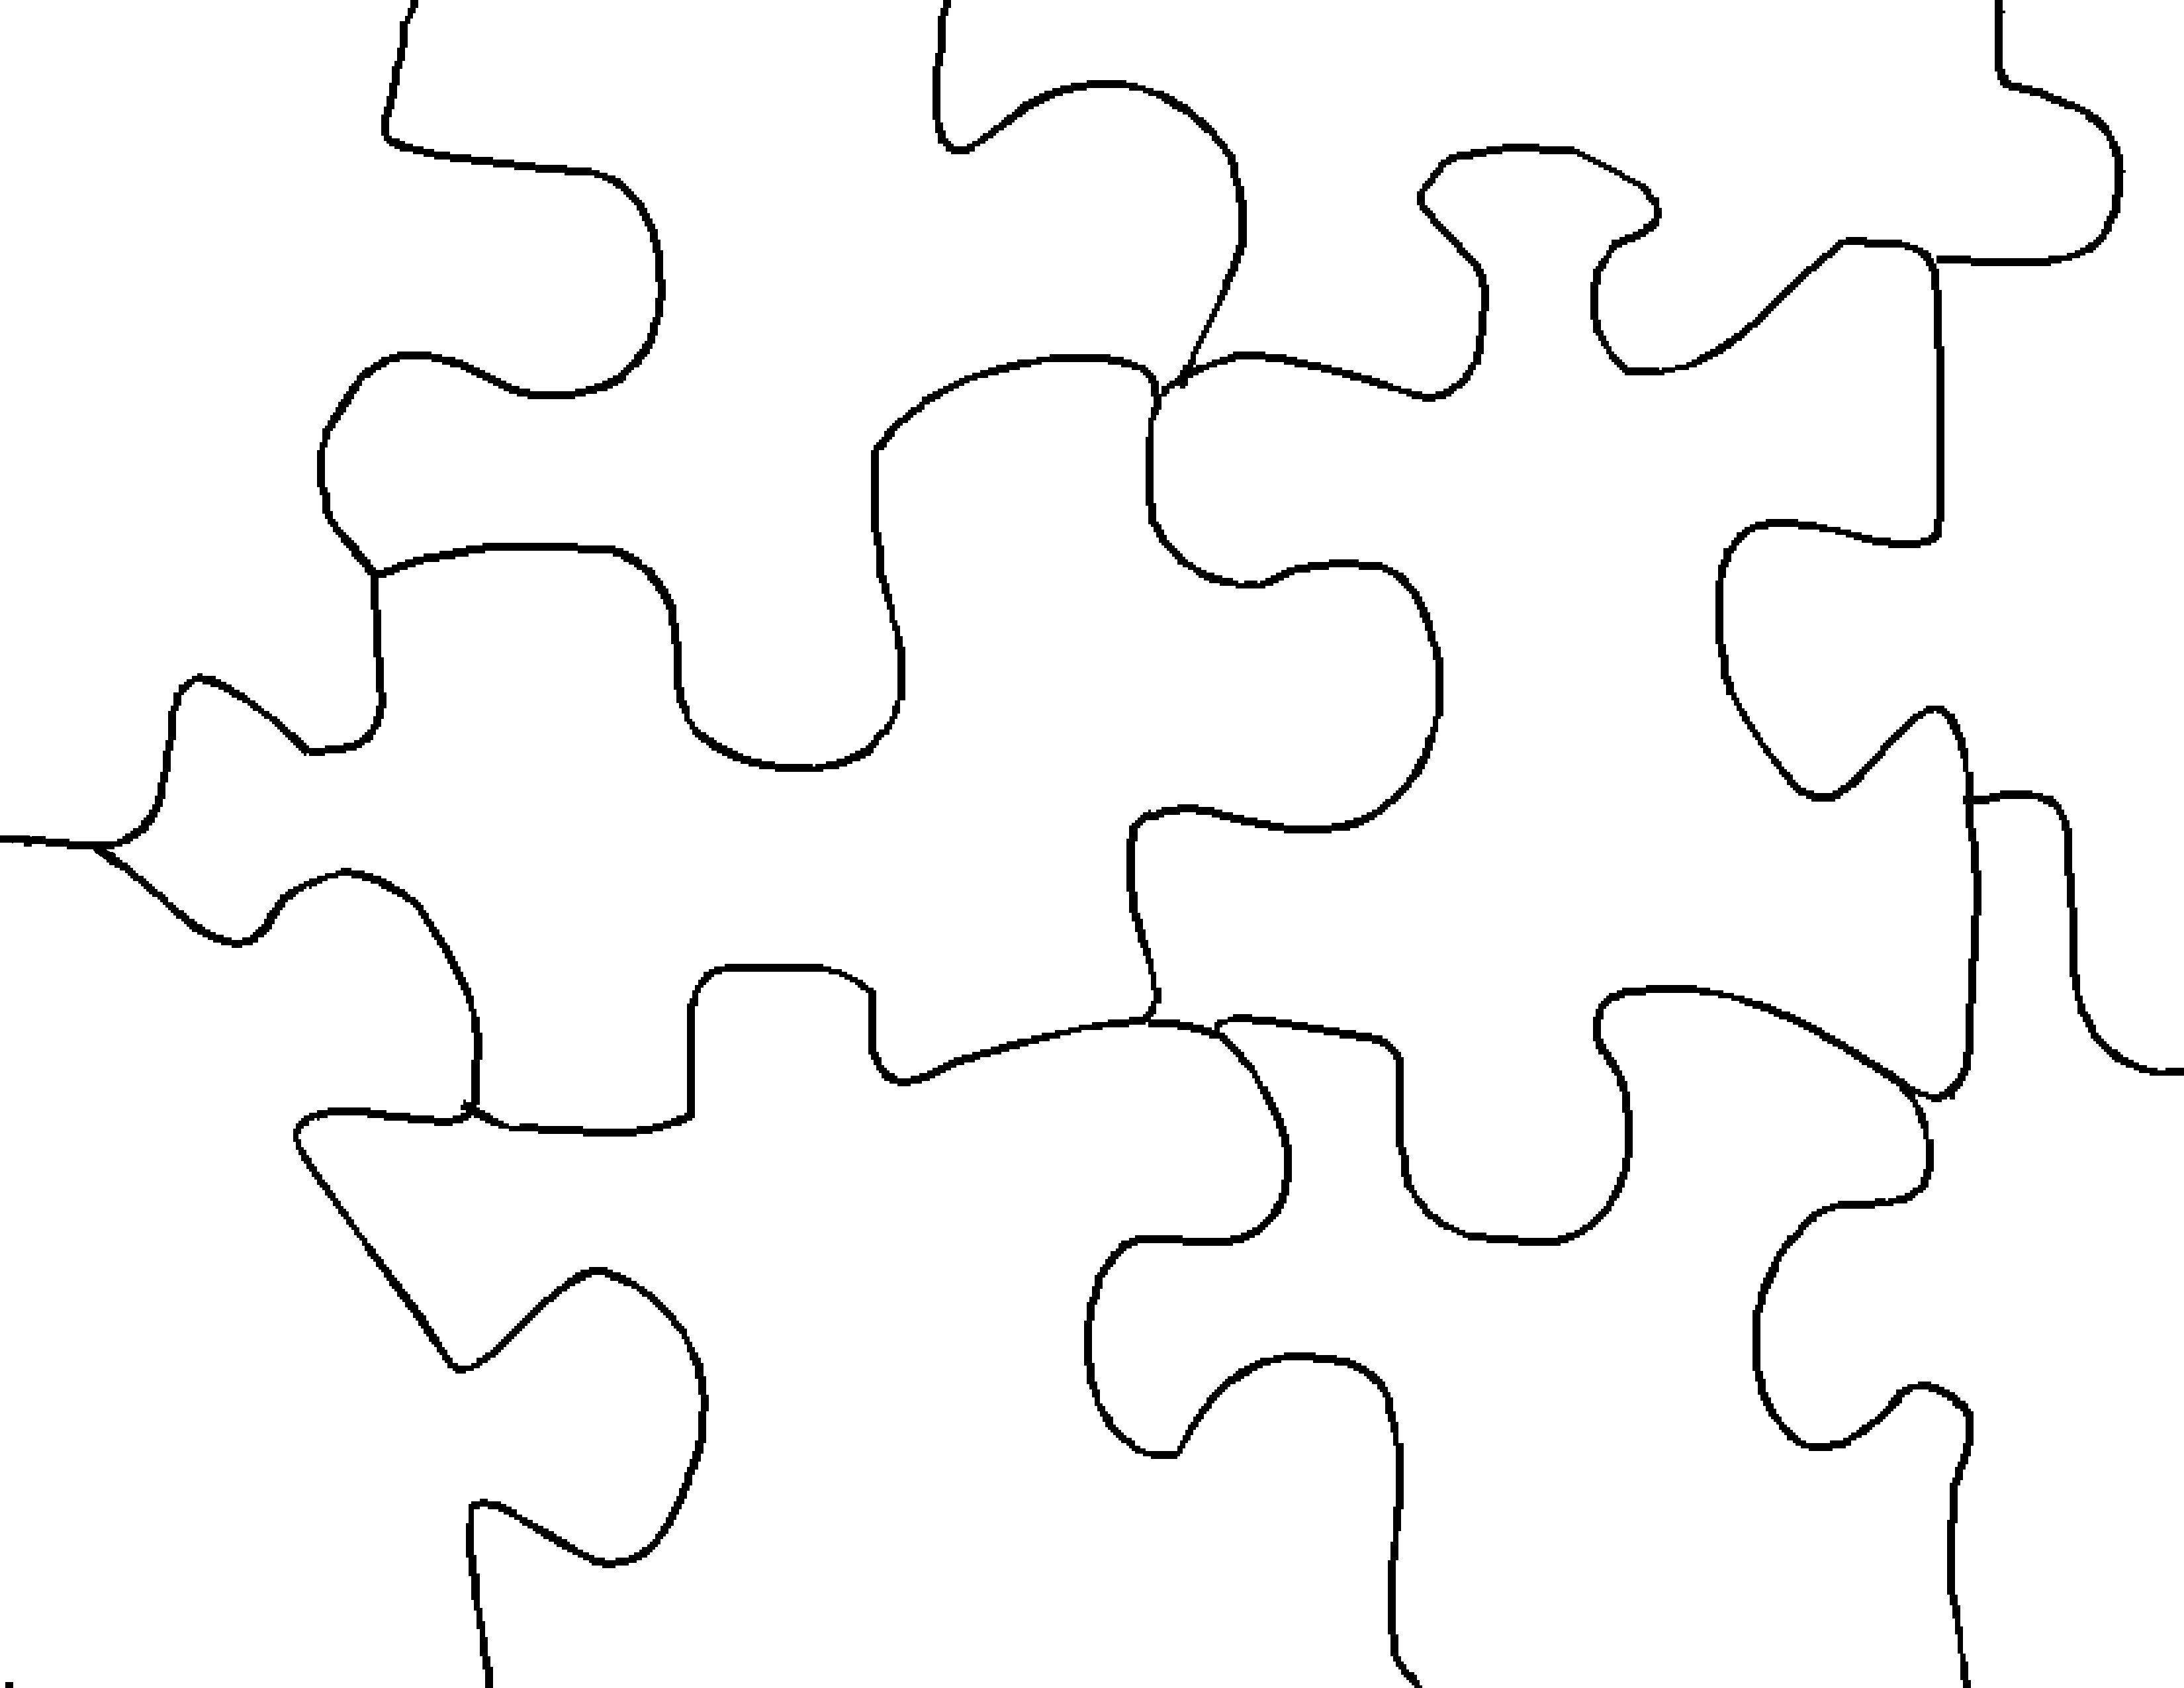 Make Jigsaw Puzzle - Printable 8 Piece Jigsaw Puzzle